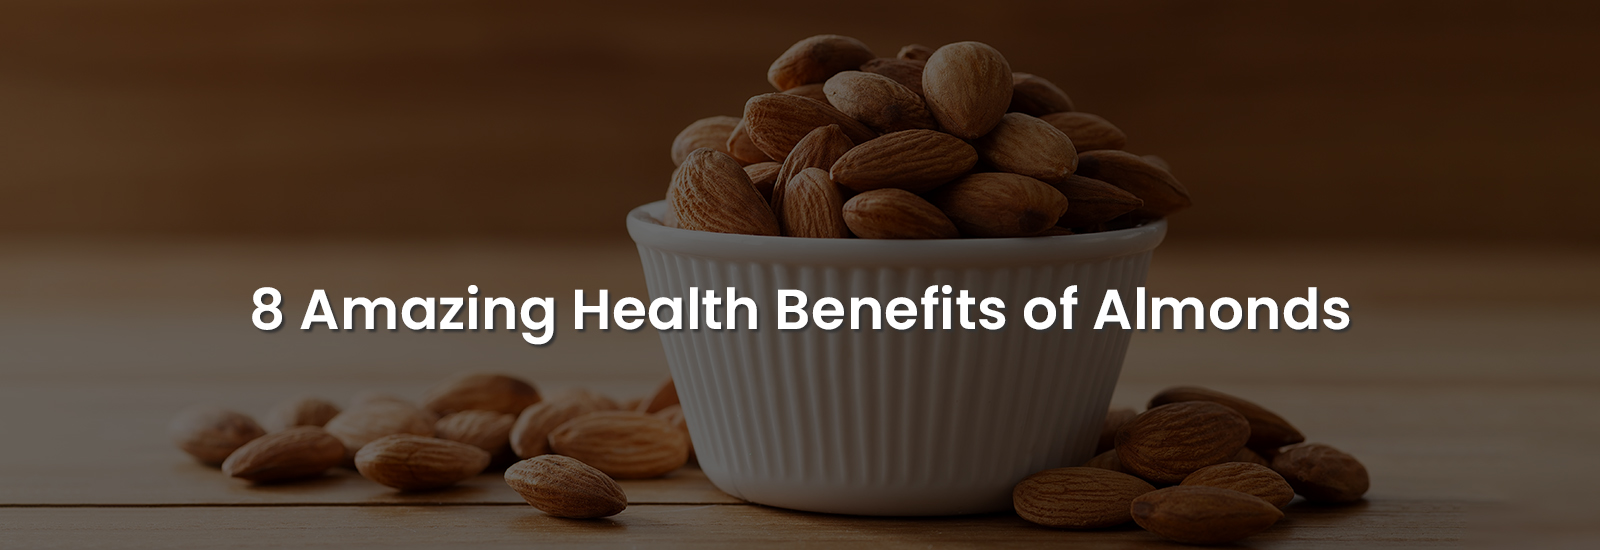 : 8 Amazing Health Benefits of Almonds | Banner Image